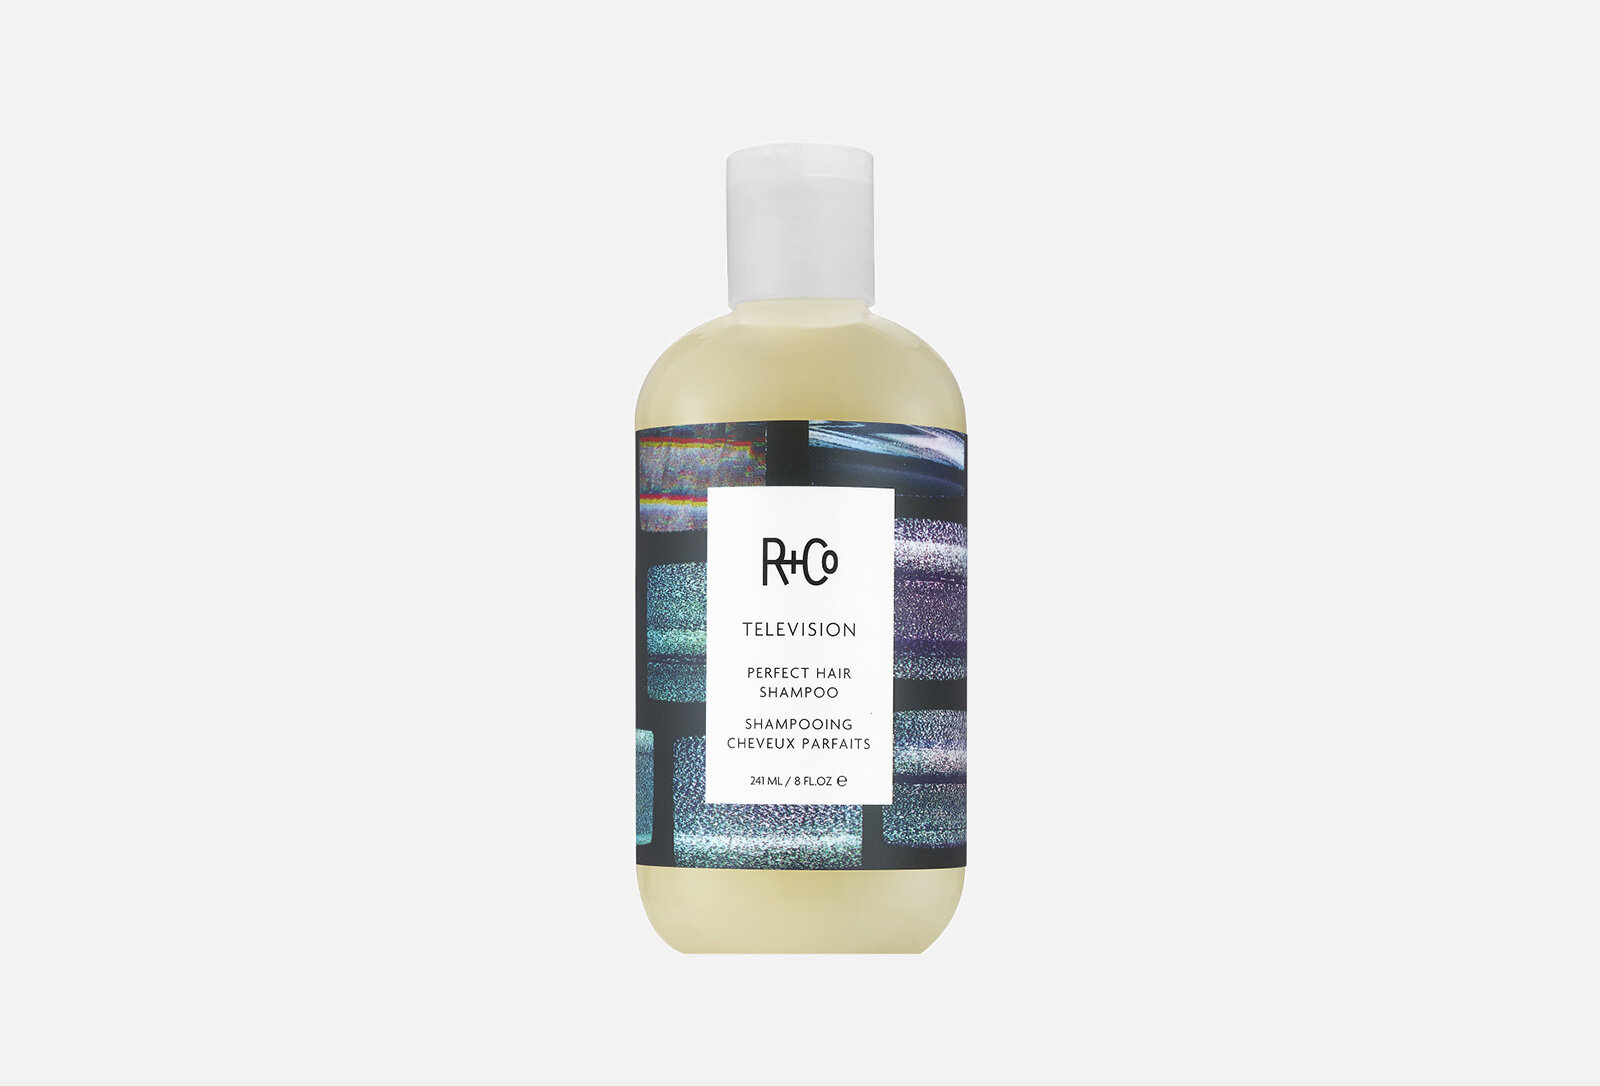 R+Co шампунь Television Perfect Hair для совершенства волос, 241 мл